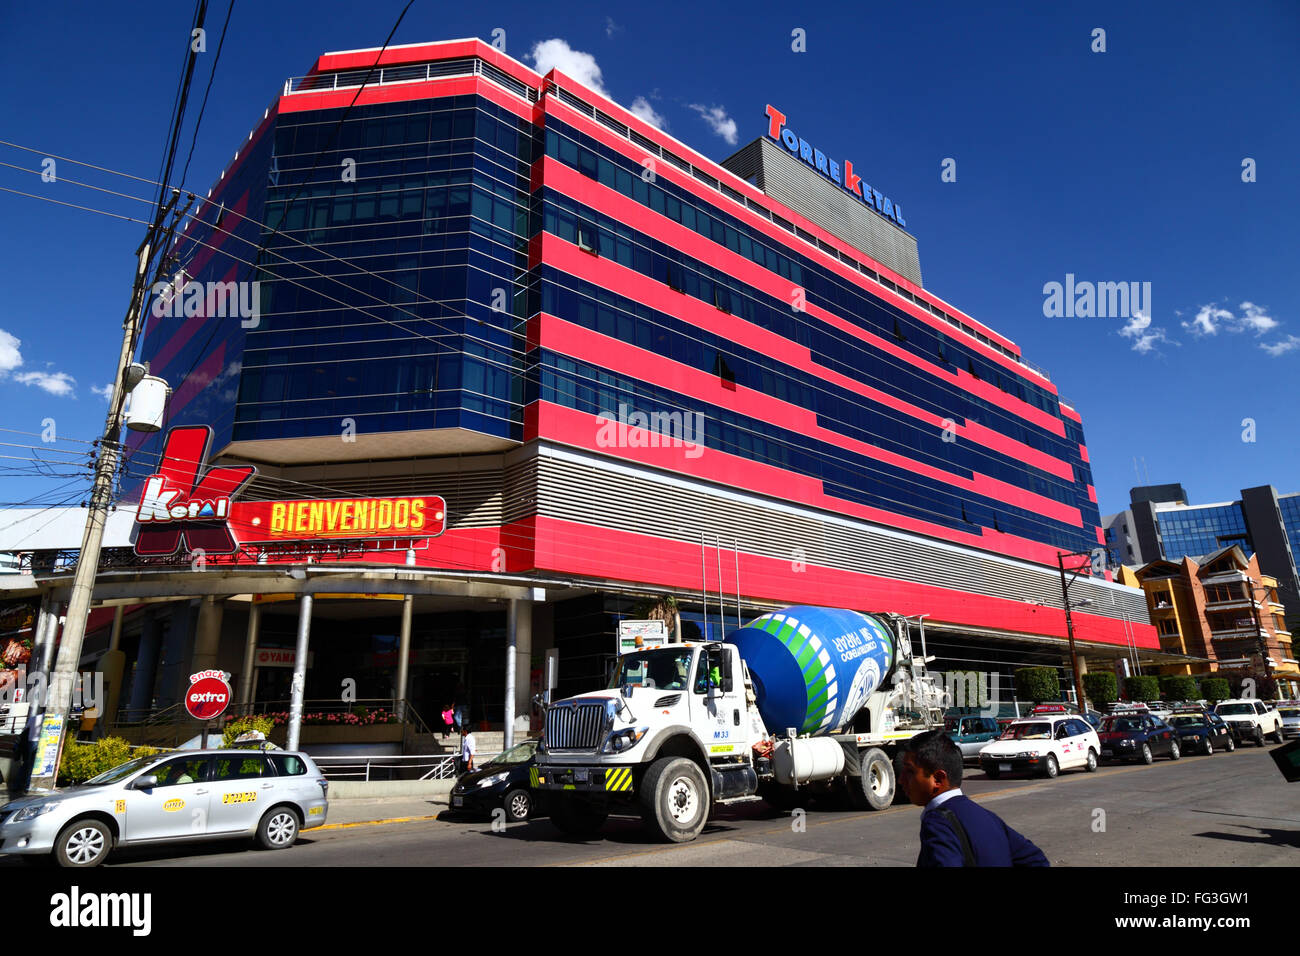 Concrete mixing truck in front of Ketal Tower, Calacoto, Zona Sur, La Paz, Bolivia Stock Photo